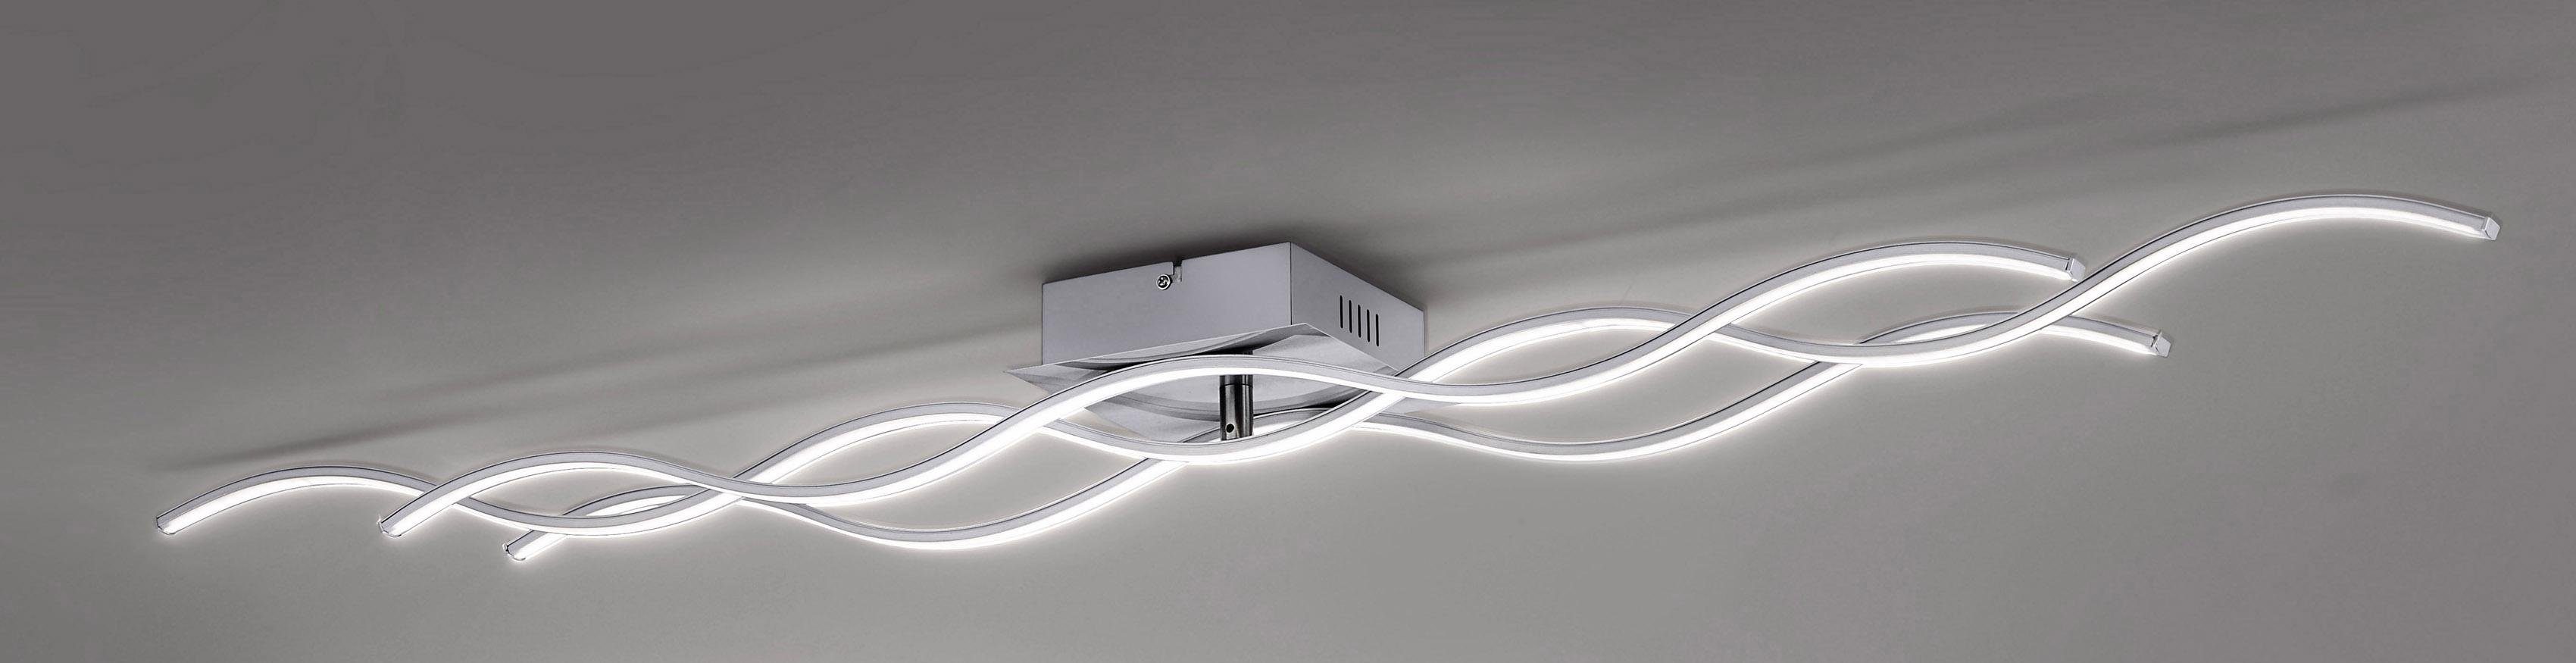 LEDLeuchtmittel WELLA, inklusive festverbautem fest integriert, Leuchten LED Deckenleuchte Warmweiß, Direkt